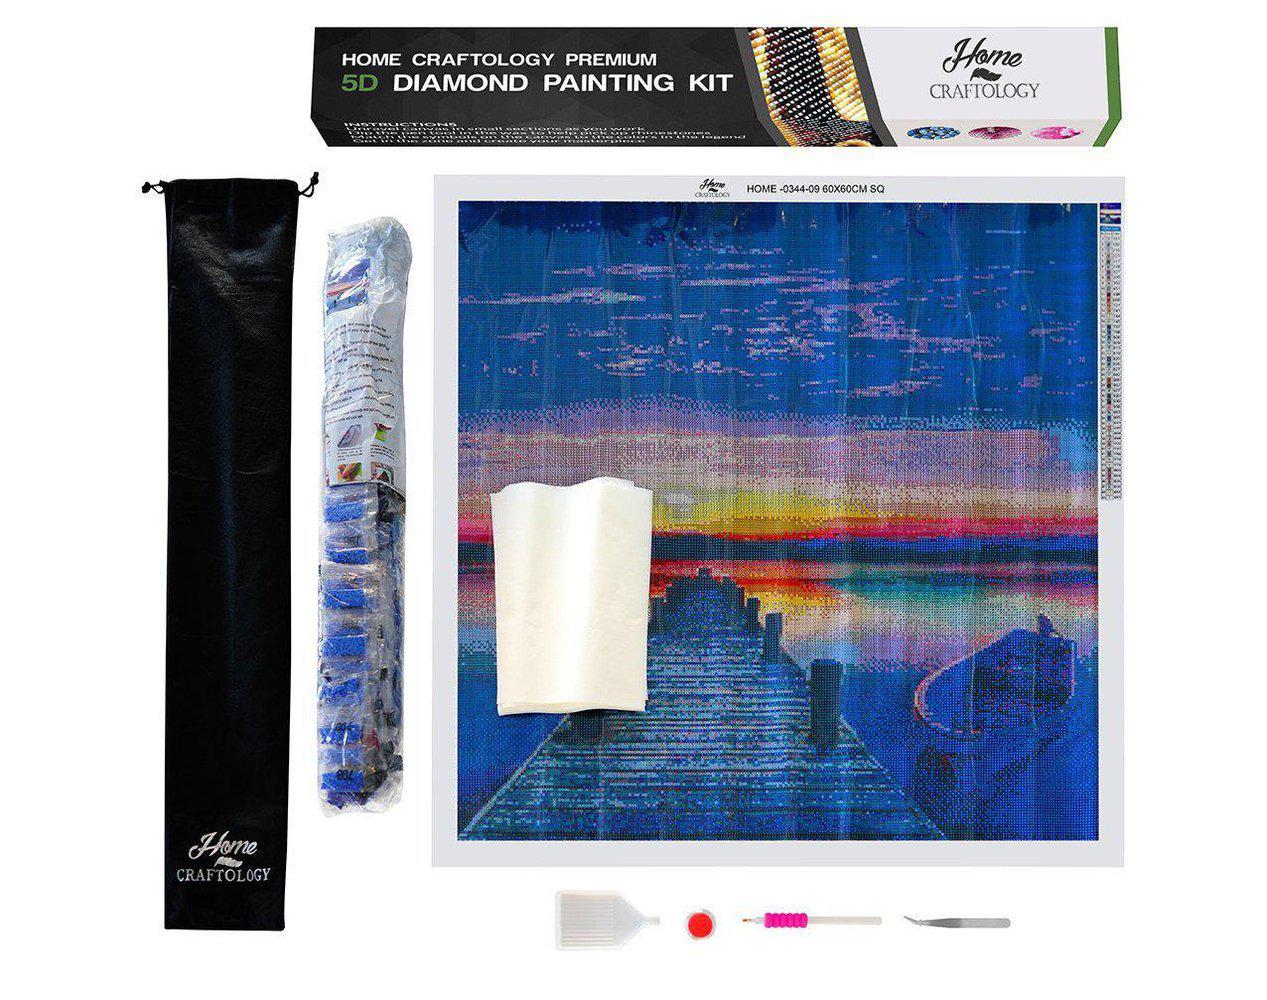 Socks with Gifts Gemstone - Premium 5D Poured Glue Diamond Painting Kit